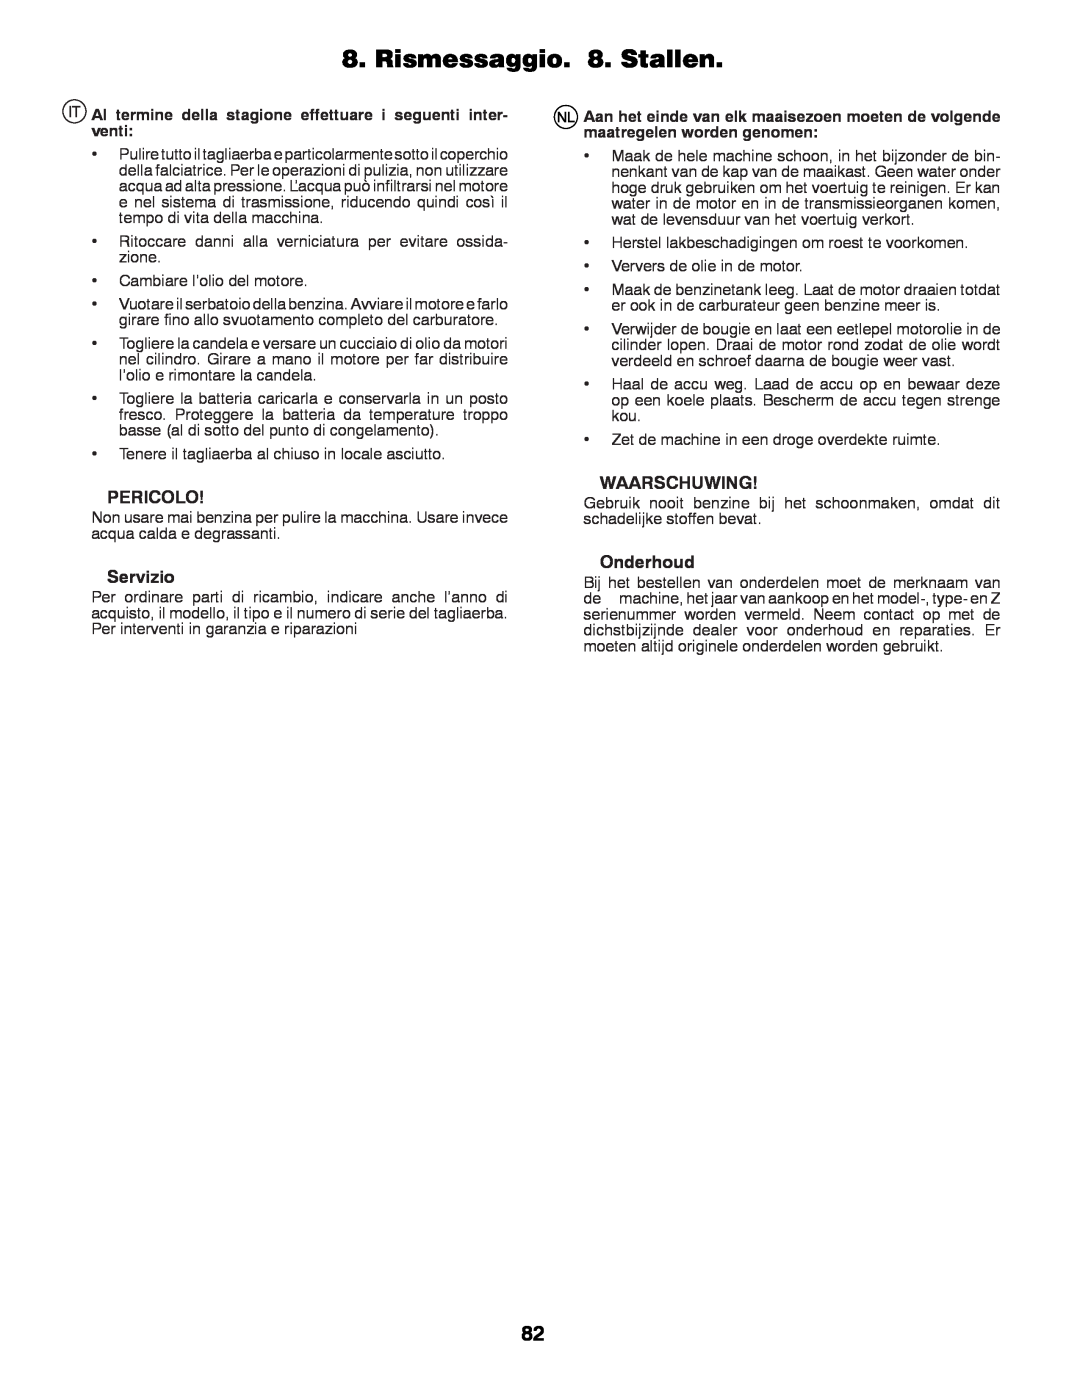 Husqvarna GTH260TWIN instruction manual Rismessaggio. 8. Stallen, Pericolo, Servizio, Waarschuwing, Onderhoud 